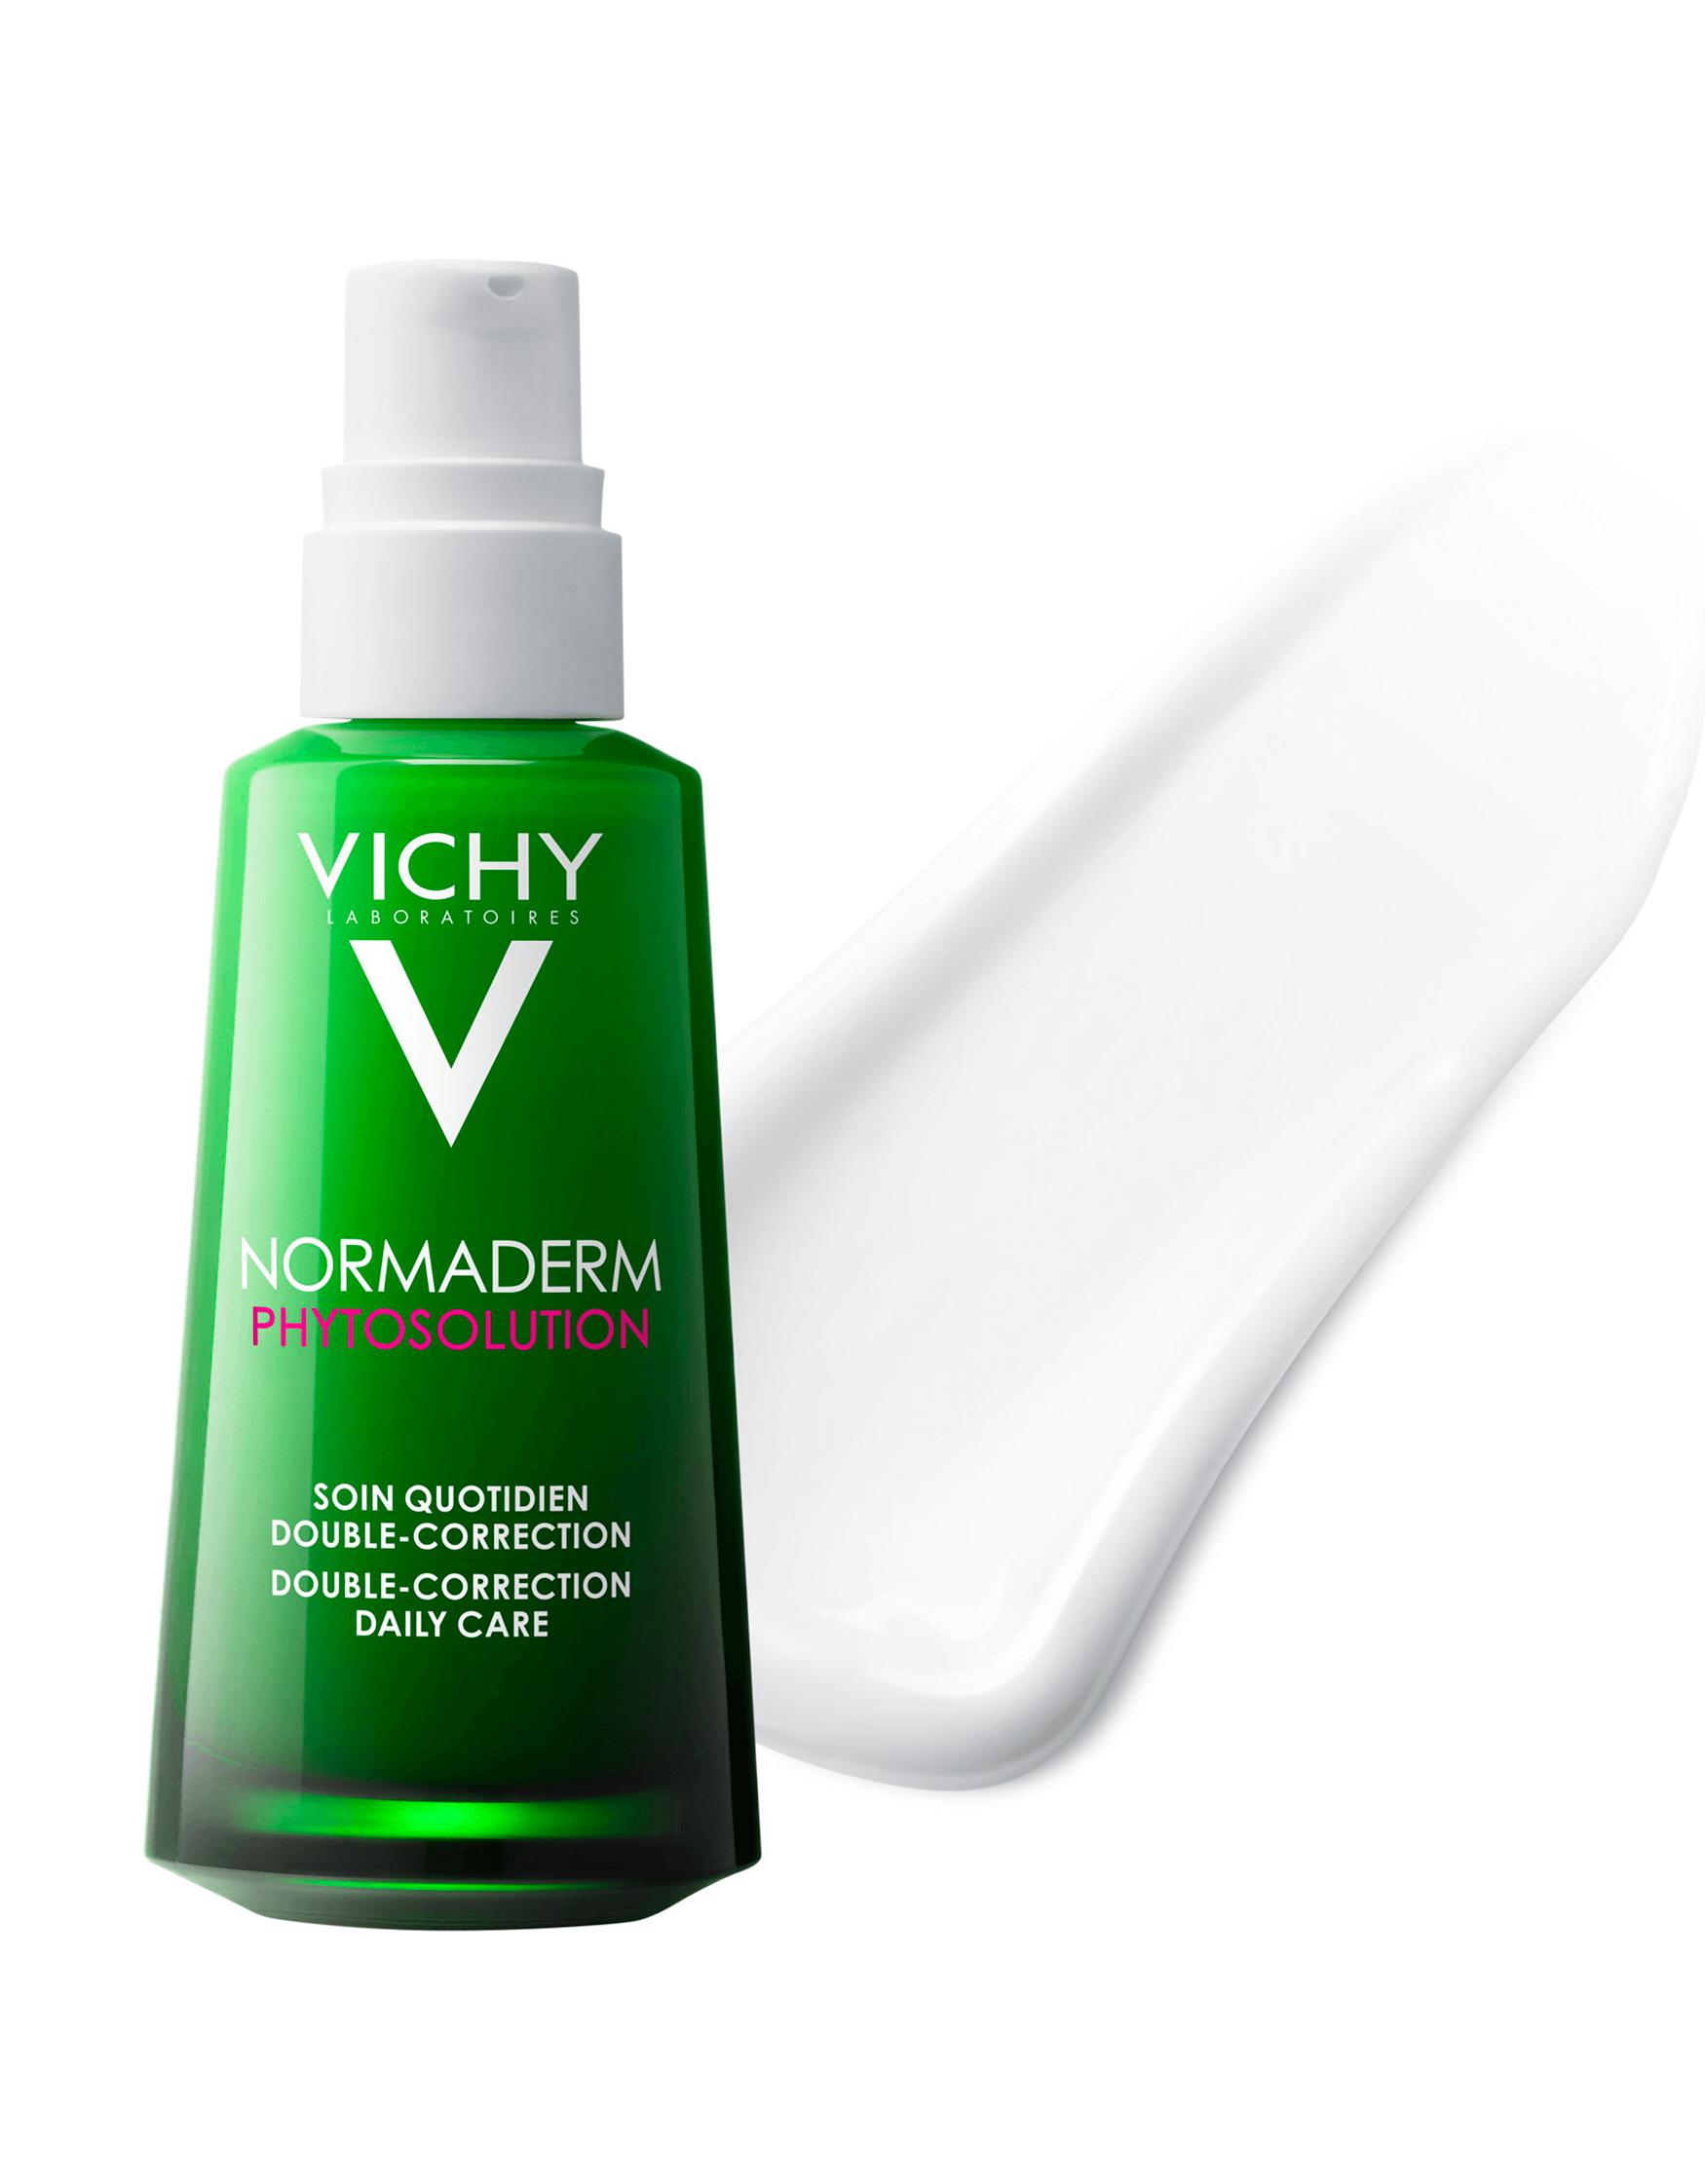 Kem dưỡng ẩm cho da dầu mụn - Normaderm Phytosolution Vichy - 50 ml